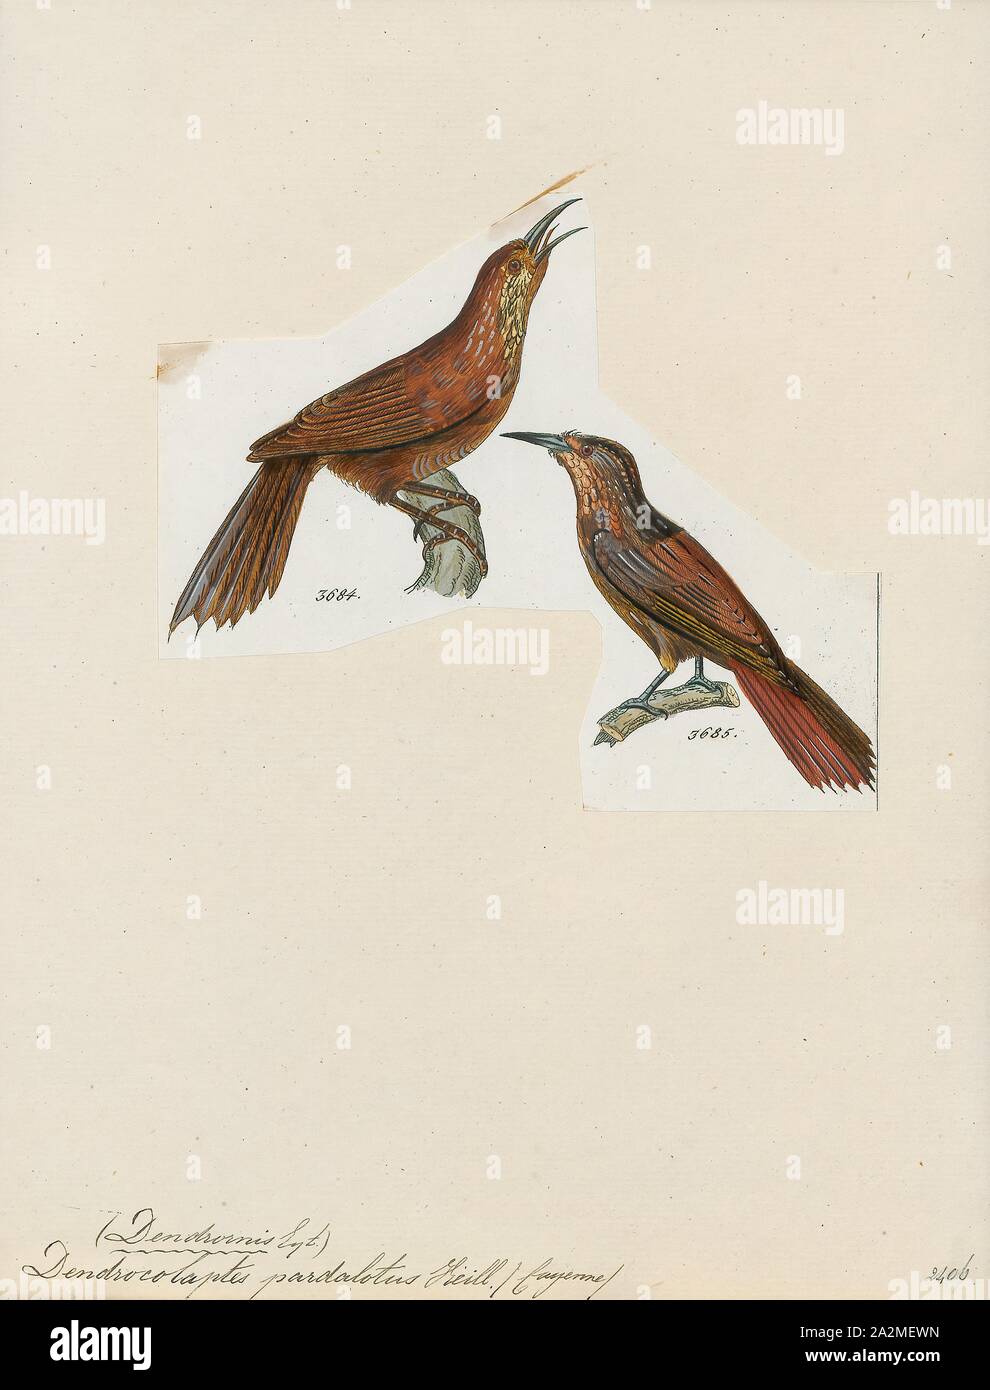 Dendrocolaptes pardalotus, Print, Dendrocolaptes is a genus of Neotropical birds in the Dendrocolaptinae subfamily., 1820-1860 Stock Photo